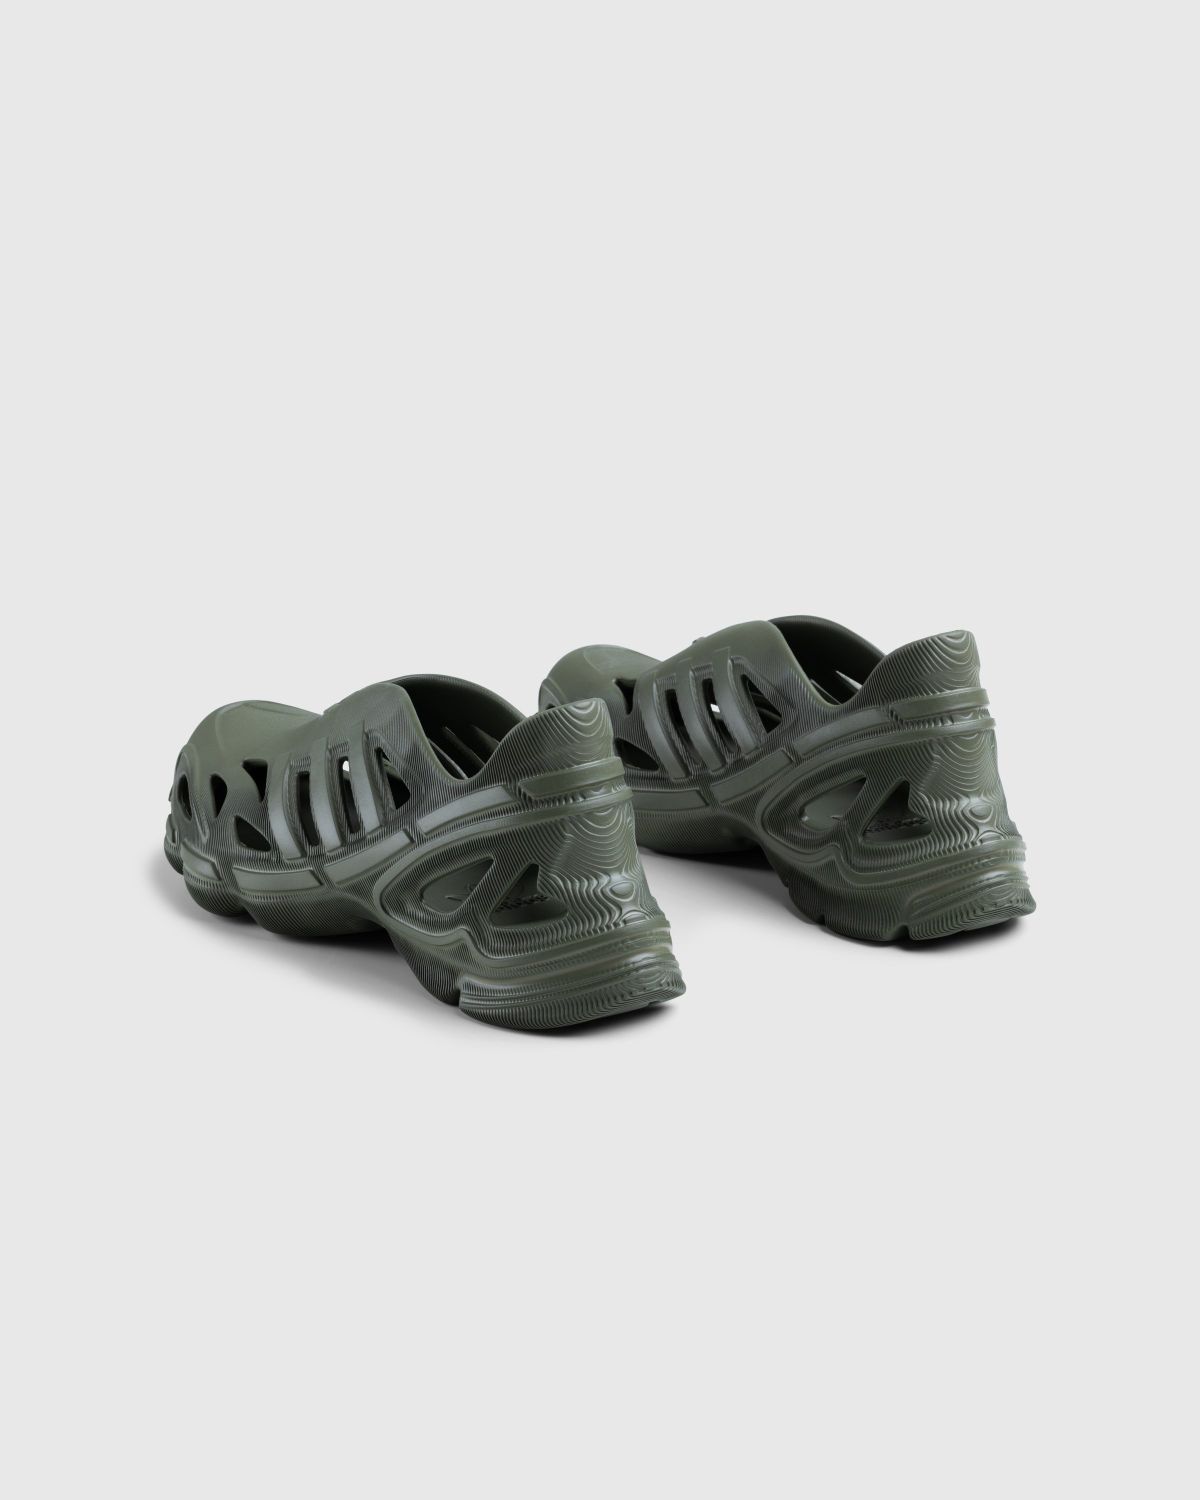 Adidas – Adifom Supernova Focus Olive - Sneakers - Green - Image 4